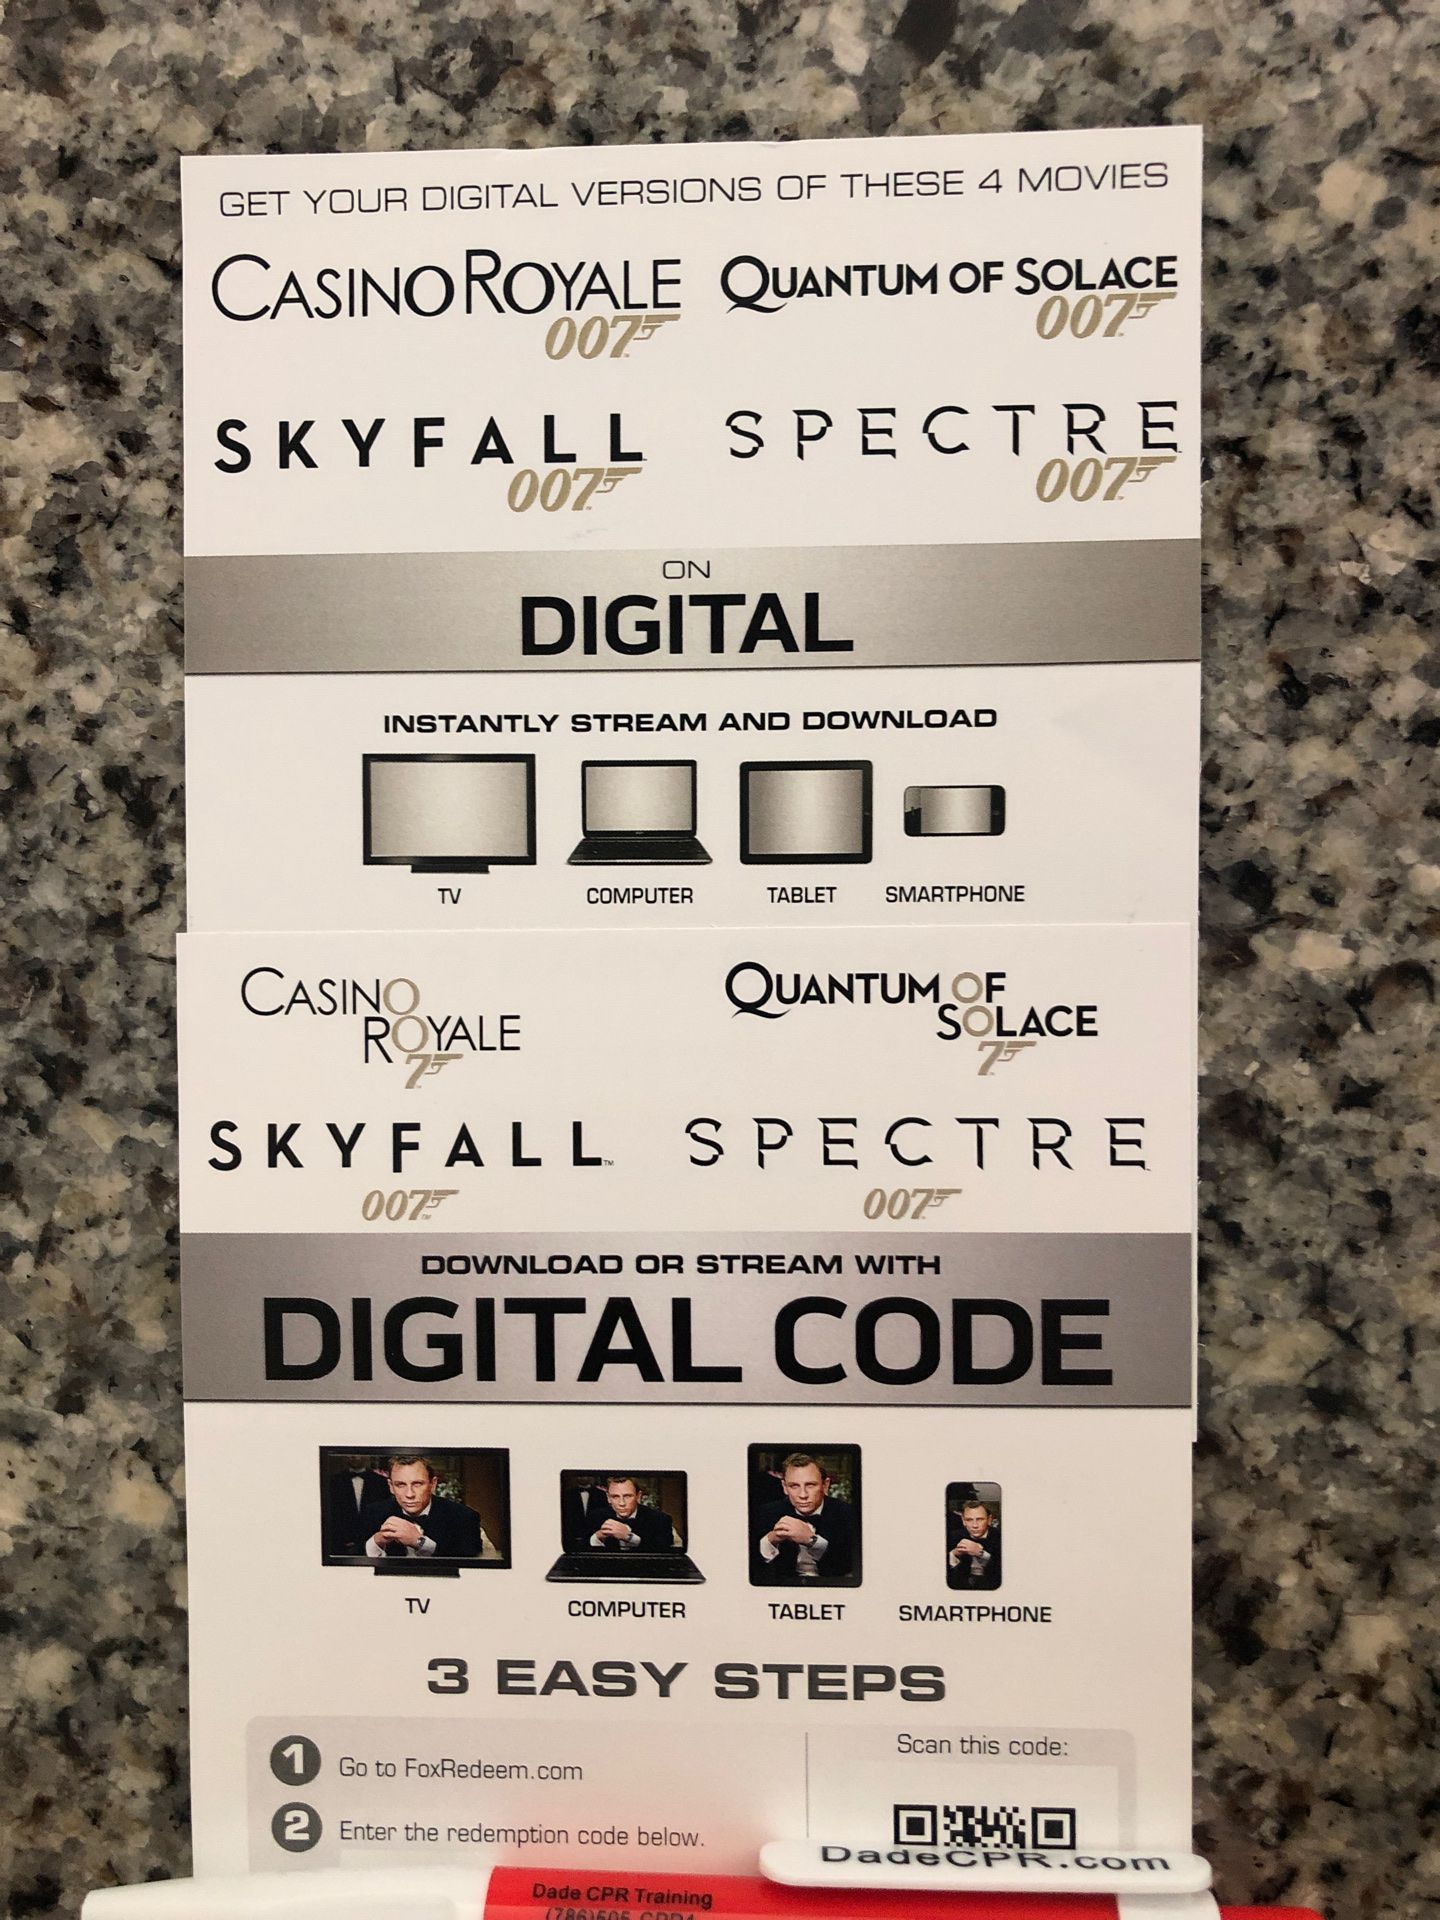 Brand new Daniel Craig collection digital codes